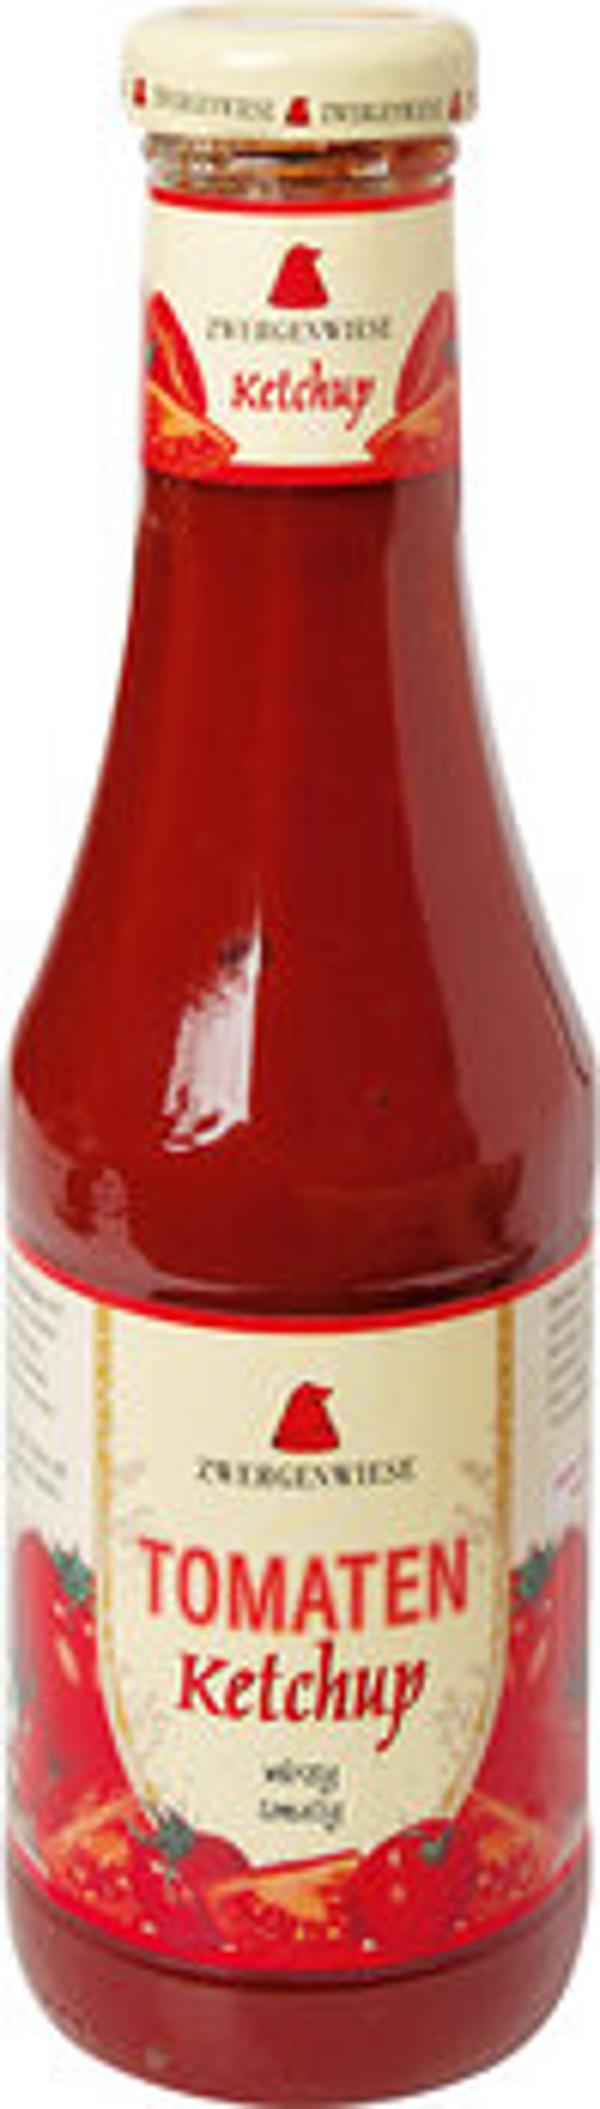 Produktfoto zu Tomaten Ketchup [500ml]